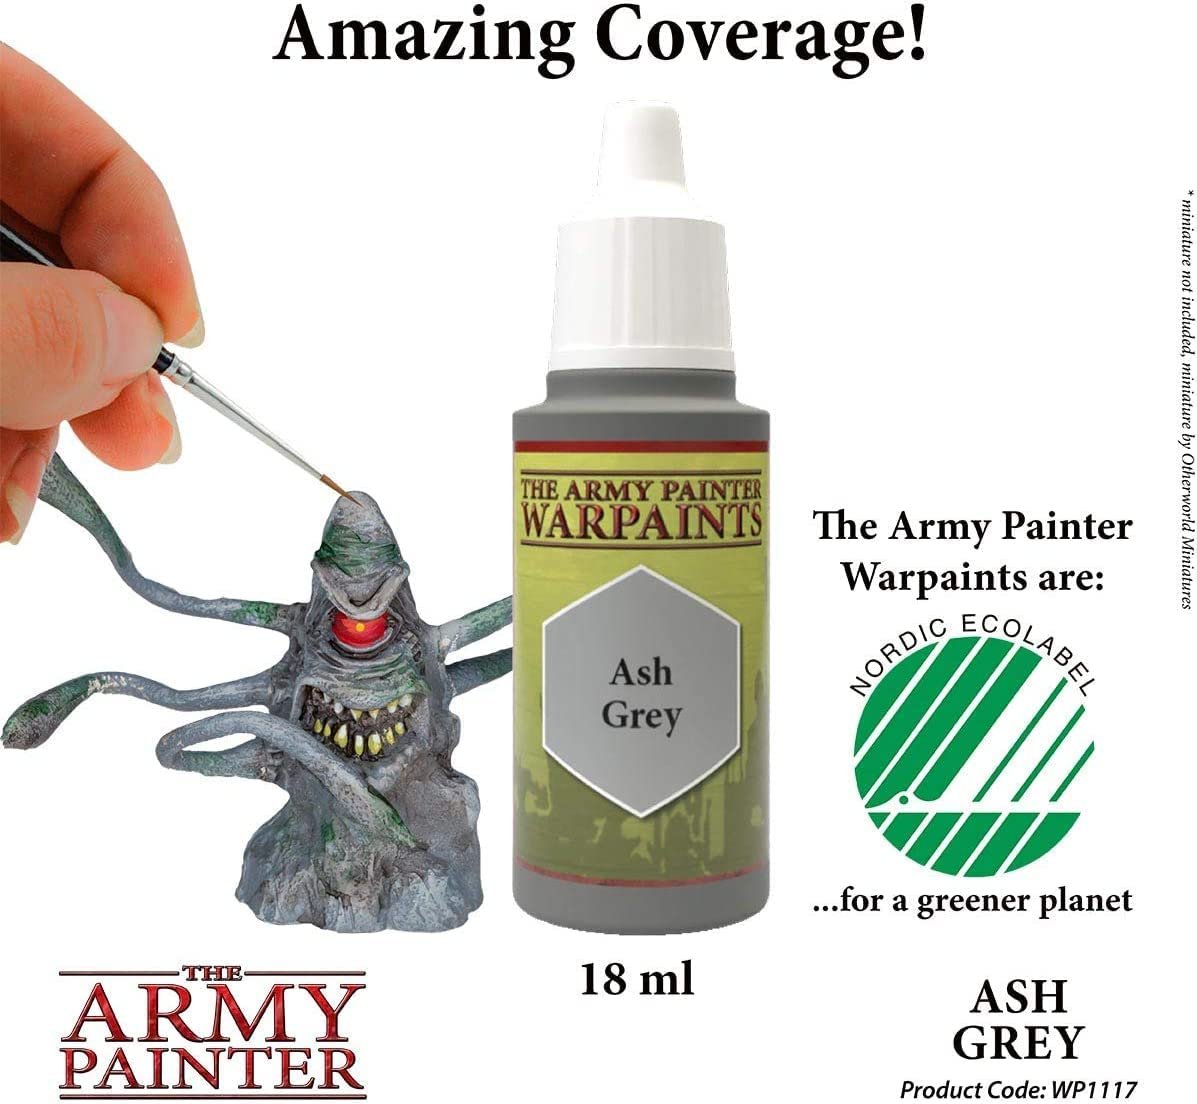 The Army Painter - Colour Primer: Ash Grey & Uniform Grey (400ml/13.5oz)